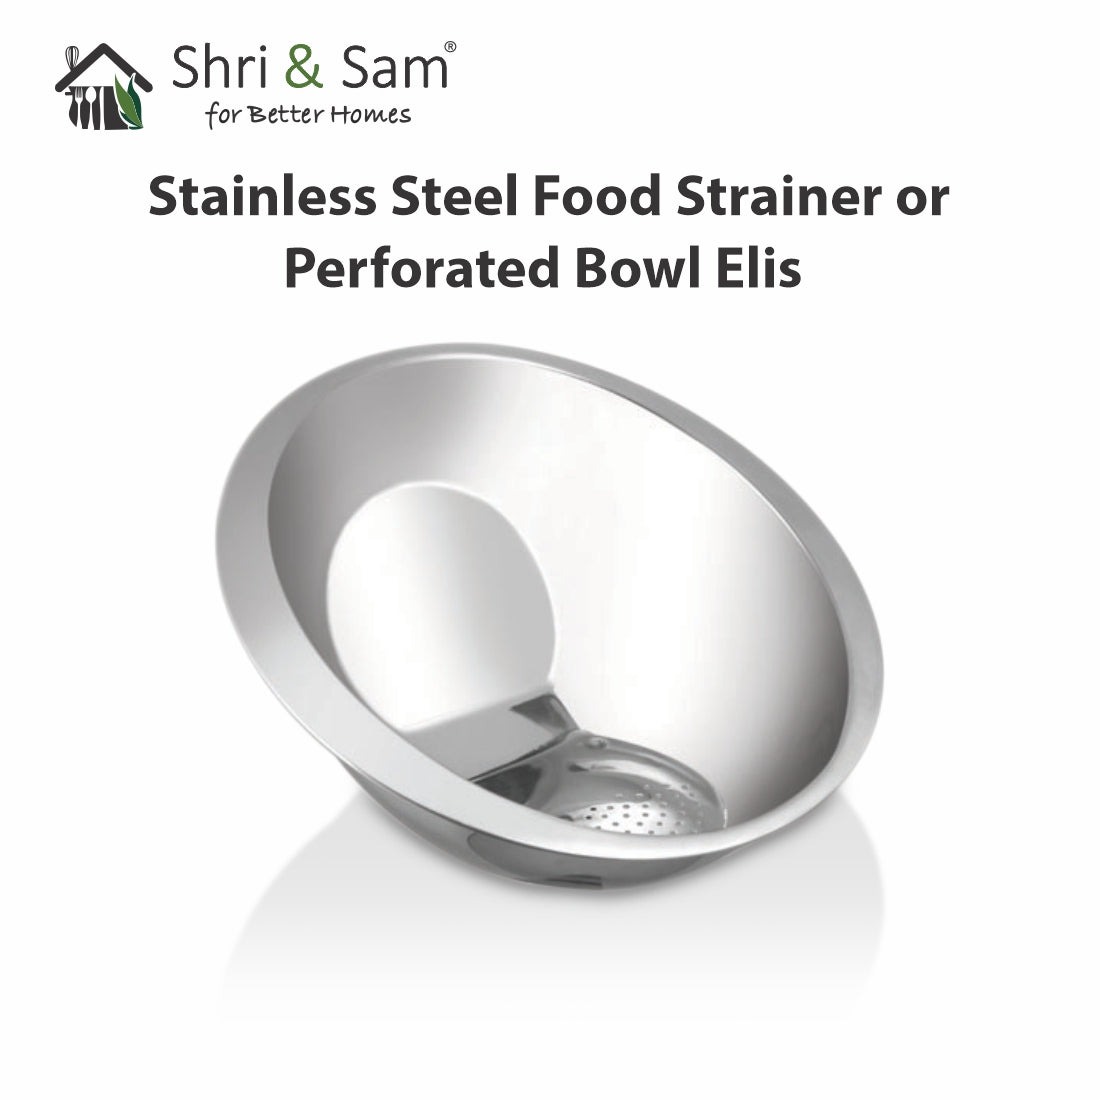 Stainless Steel Food Strainer or Perforated Bowl Elis